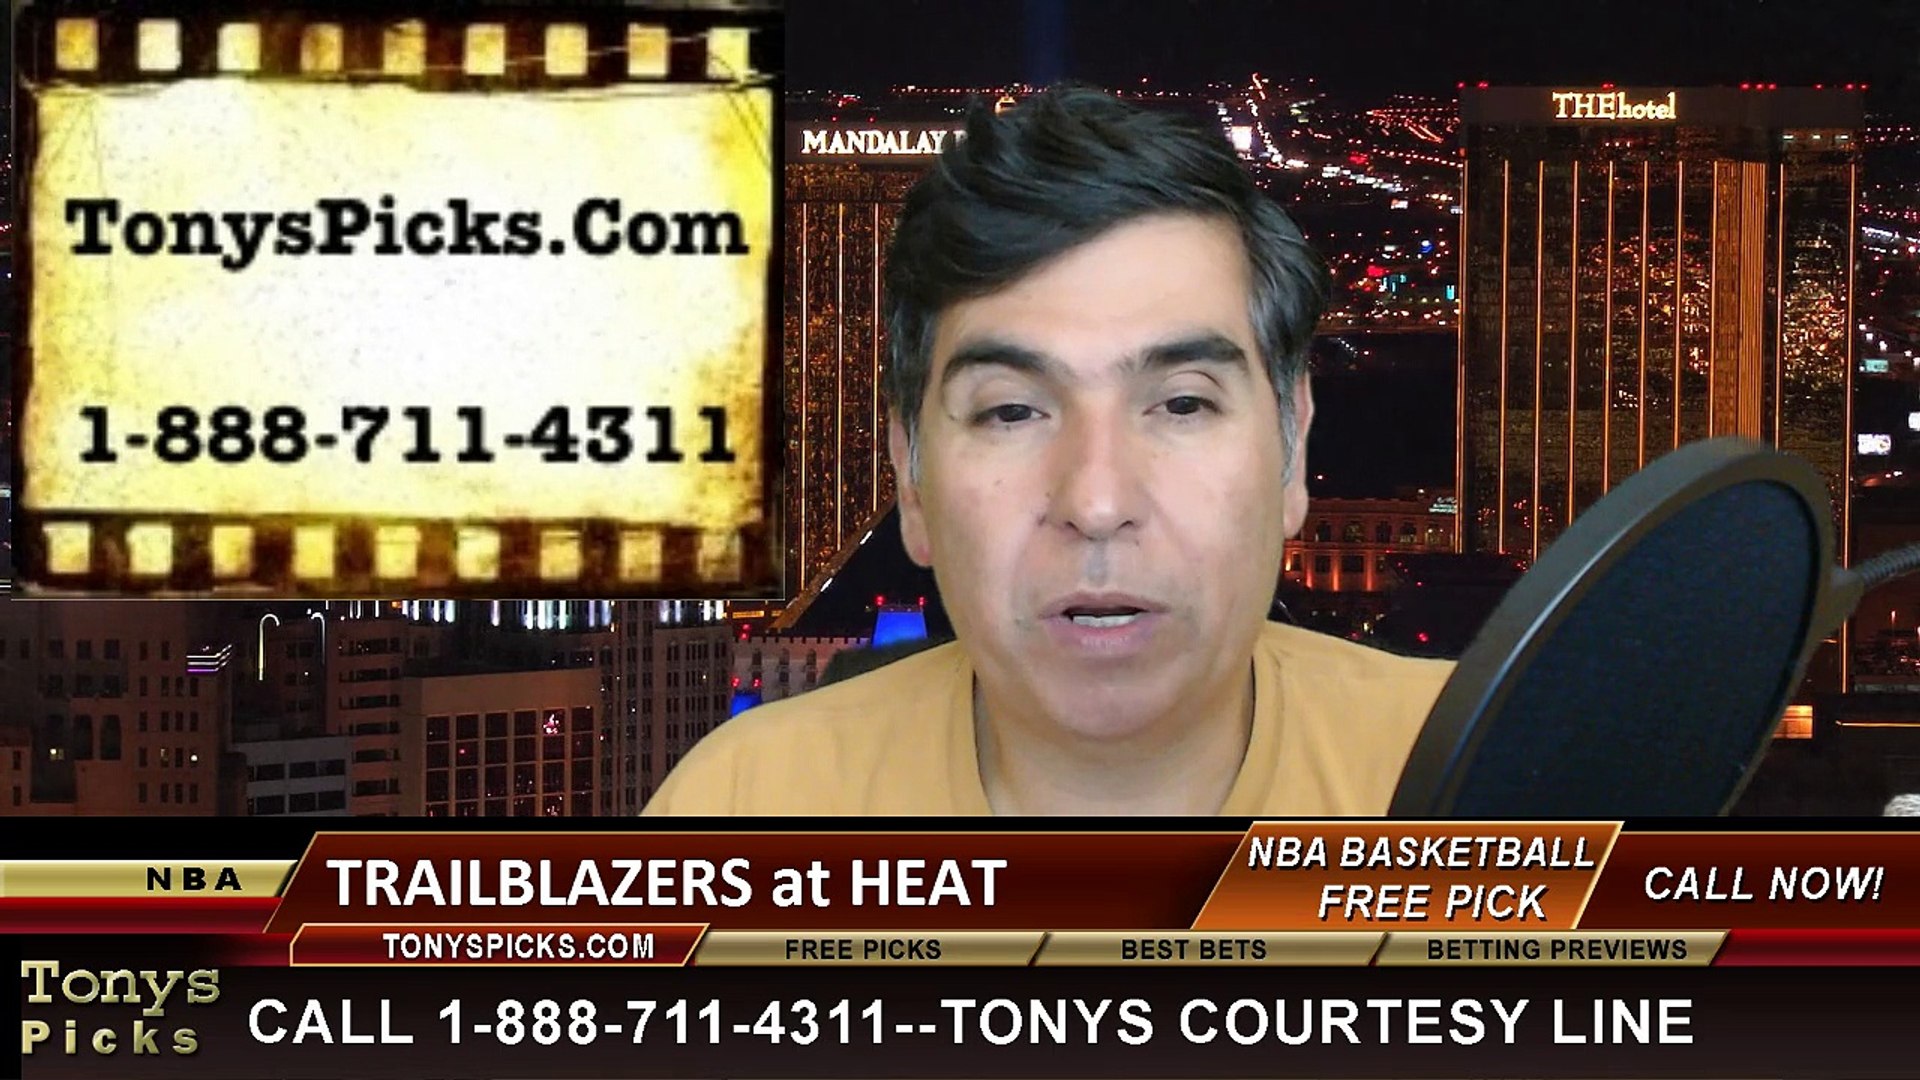 Miami Heat vs. Portland Trailblazers Free Pick Prediction NBA Pro Basketball Odds Preview 3-18-2015